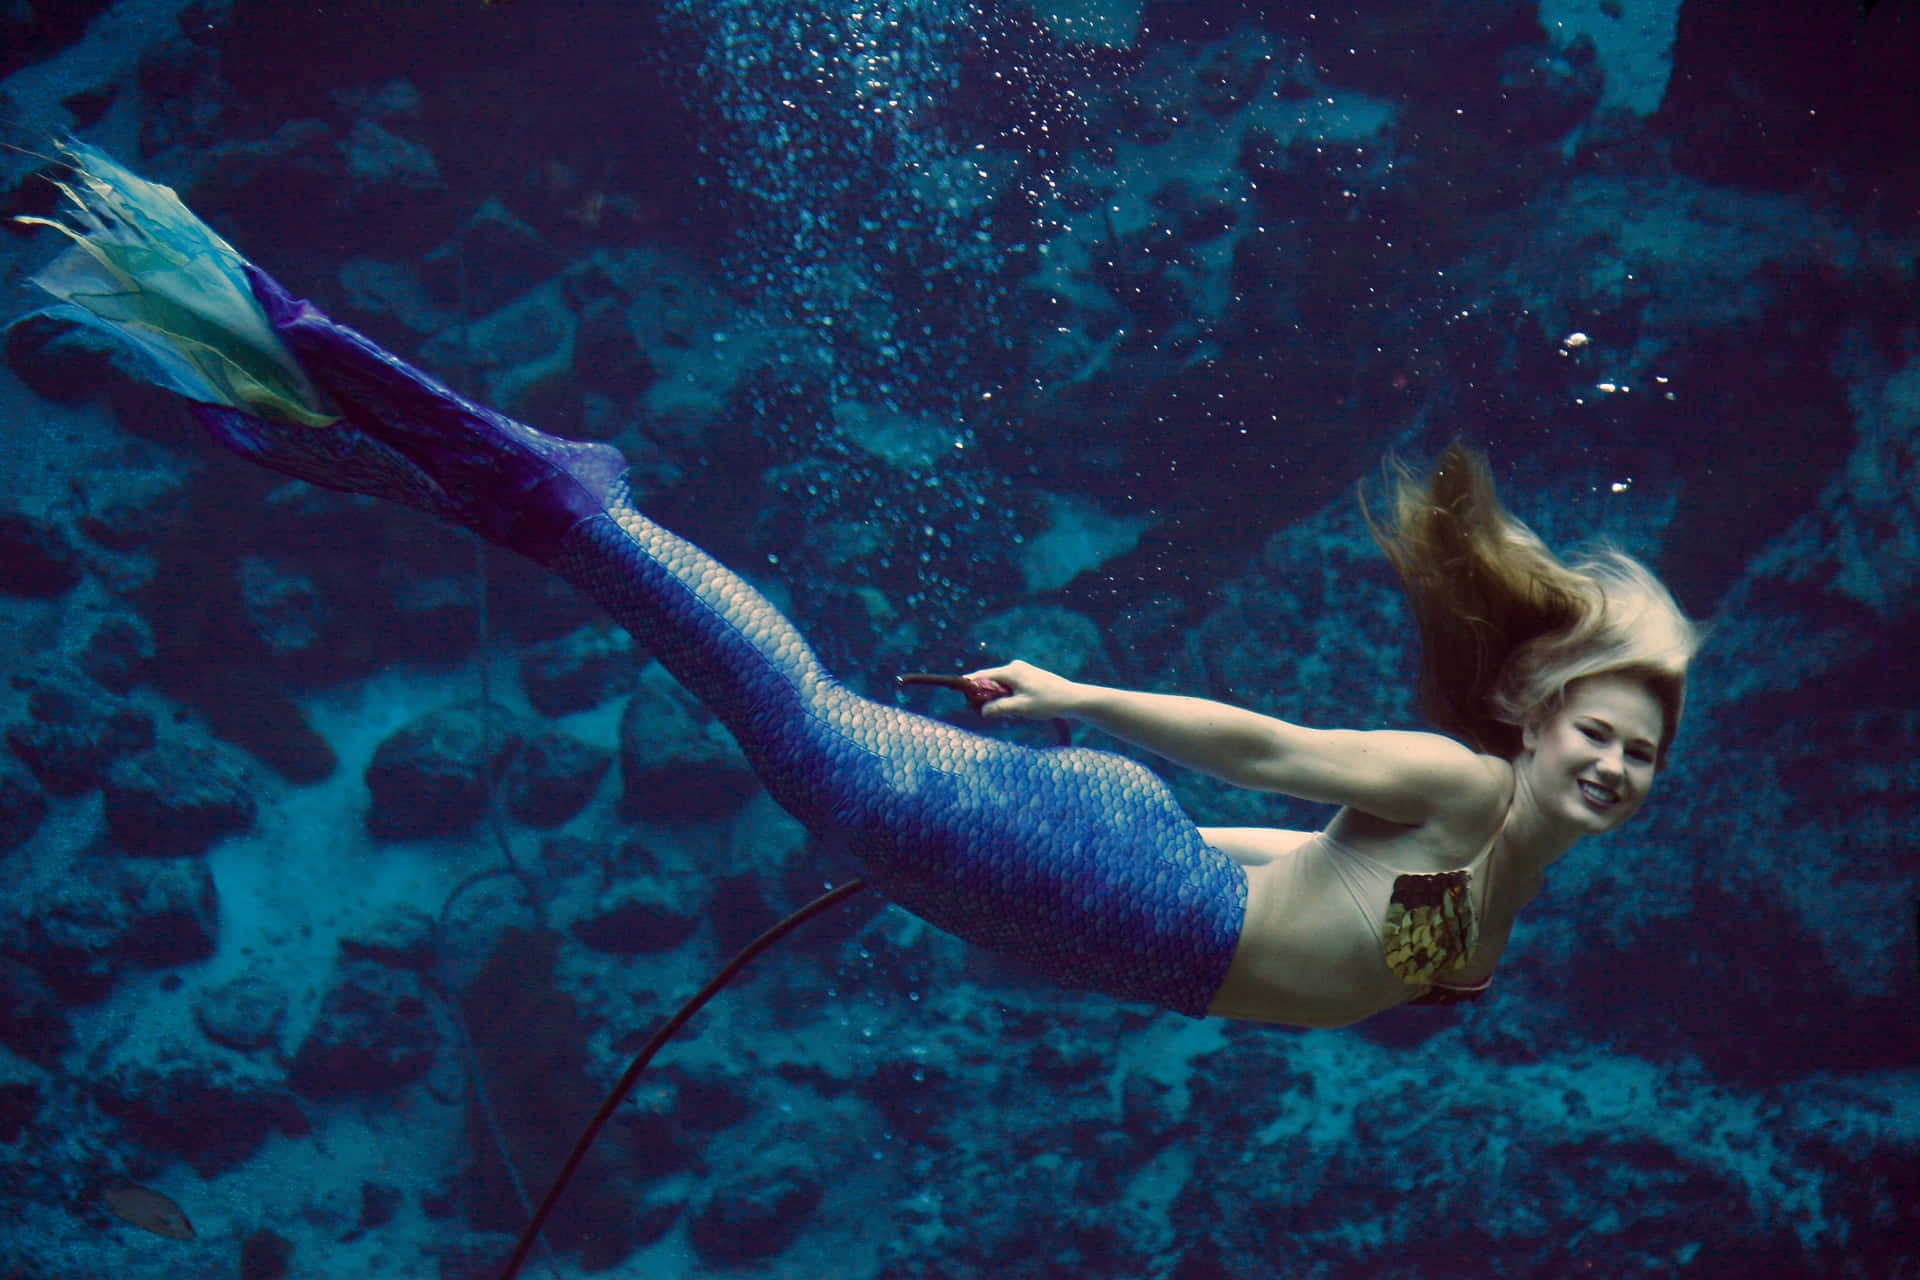 A beautiful mermaid swimming in the ocean